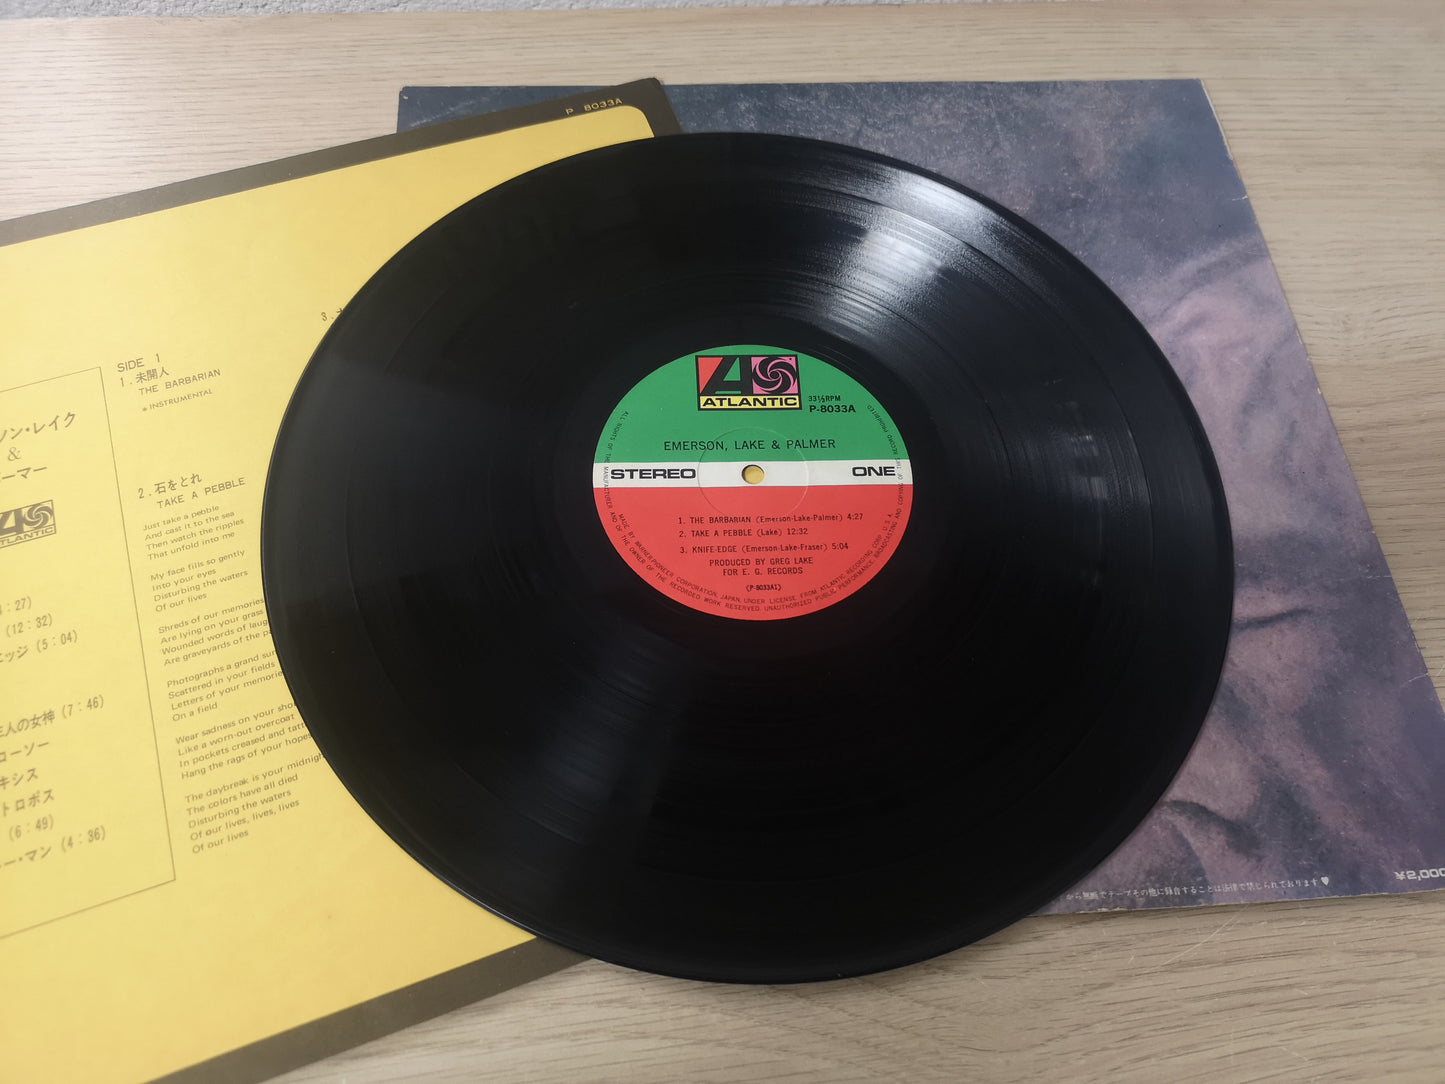 Emerson Lake & Palmer "S/T" Orig Japan 1970 VG++/M- (Insert)